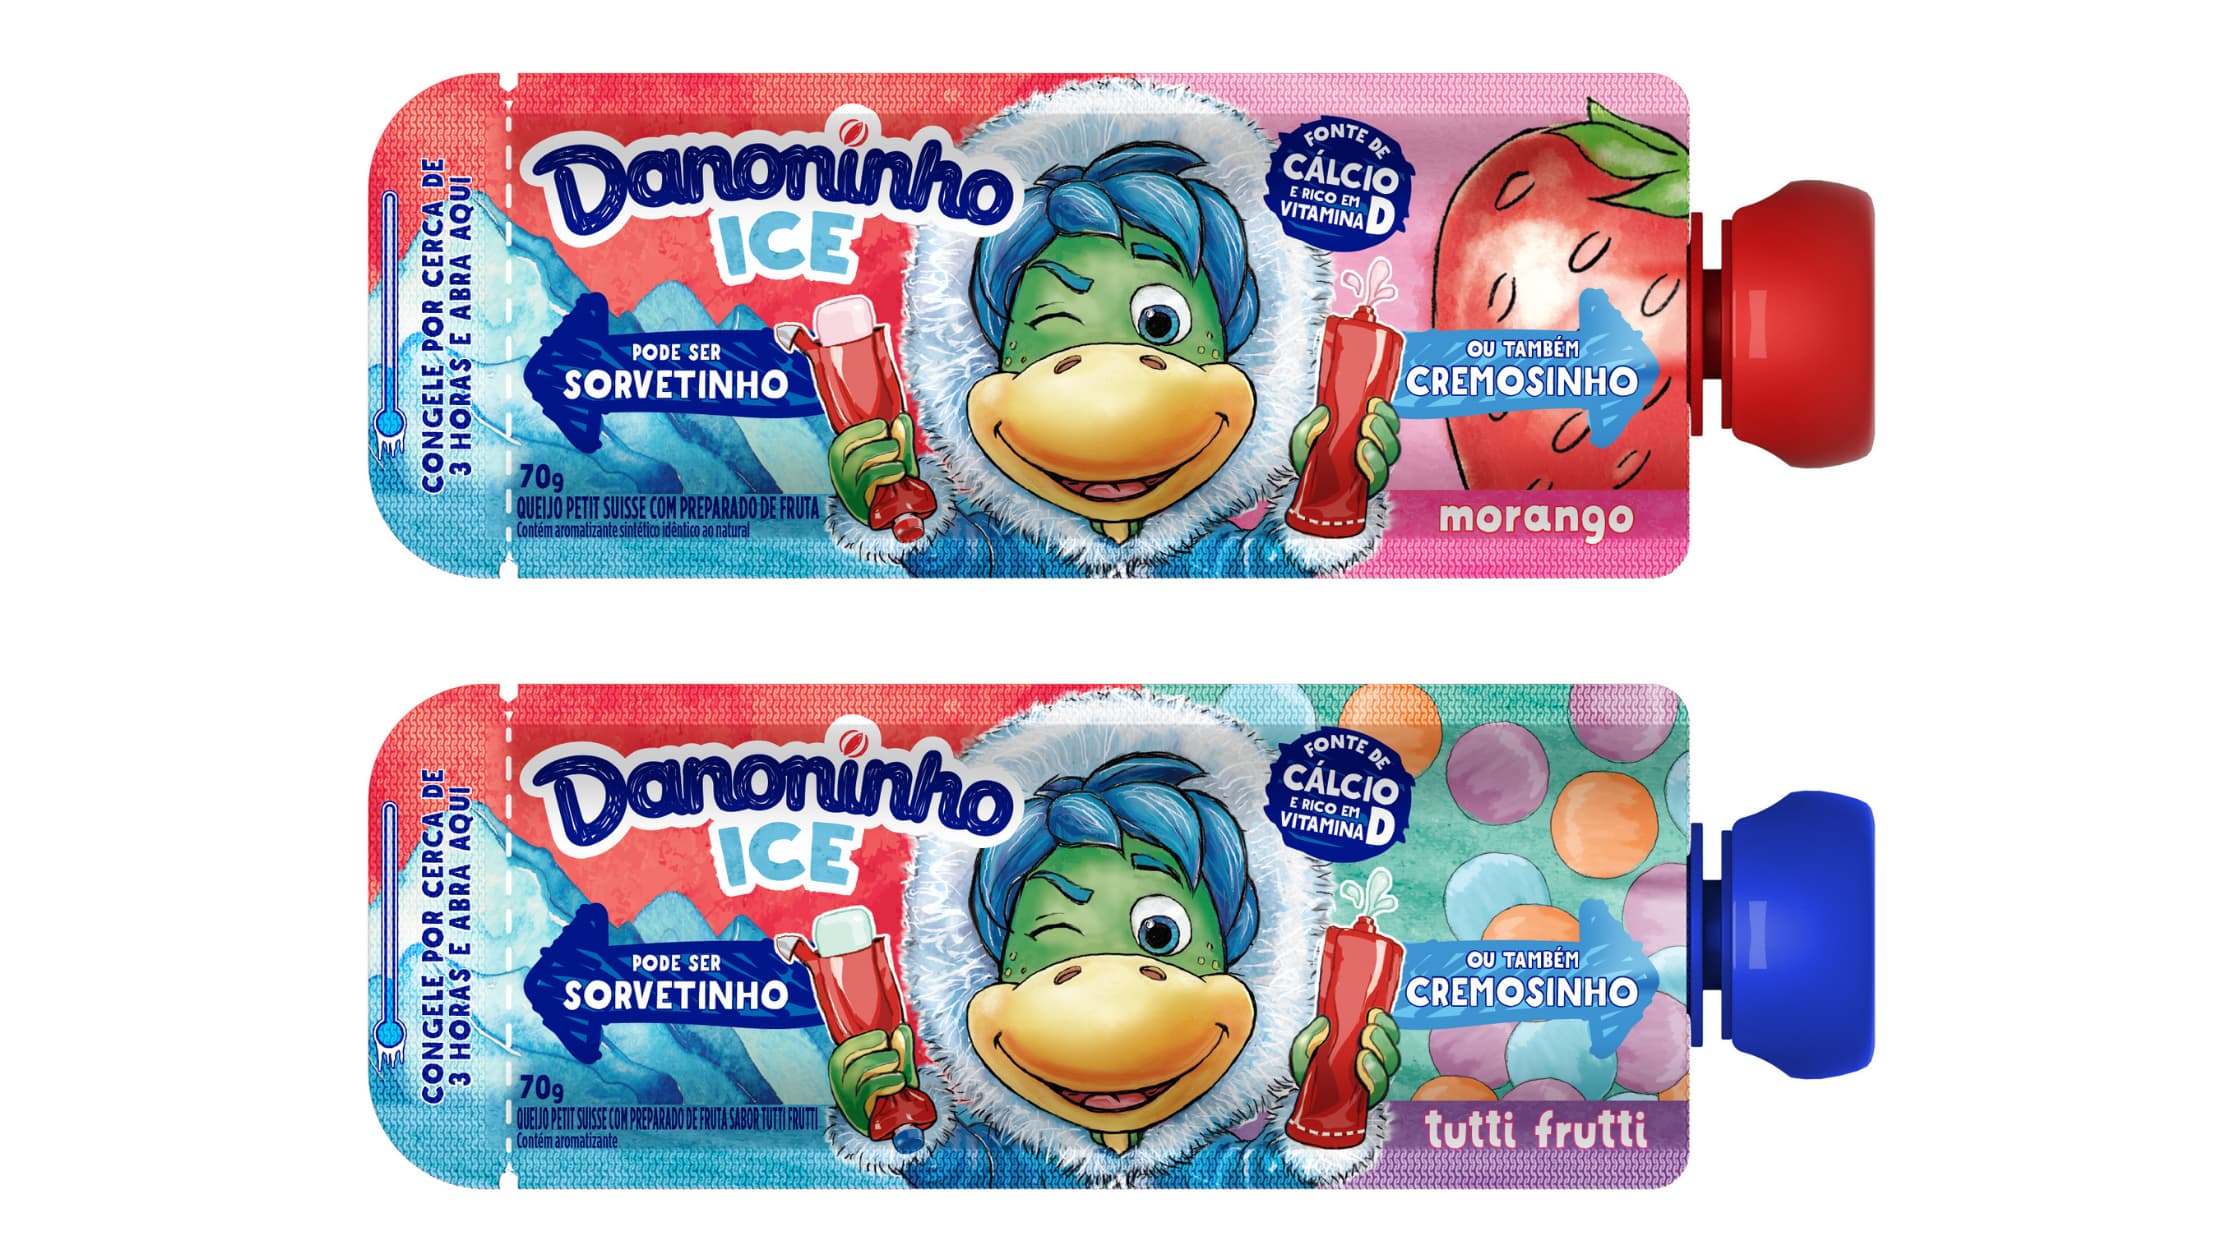 danoninho ice comercial, quem lembra? #danoninho #danoninhoice #comerc